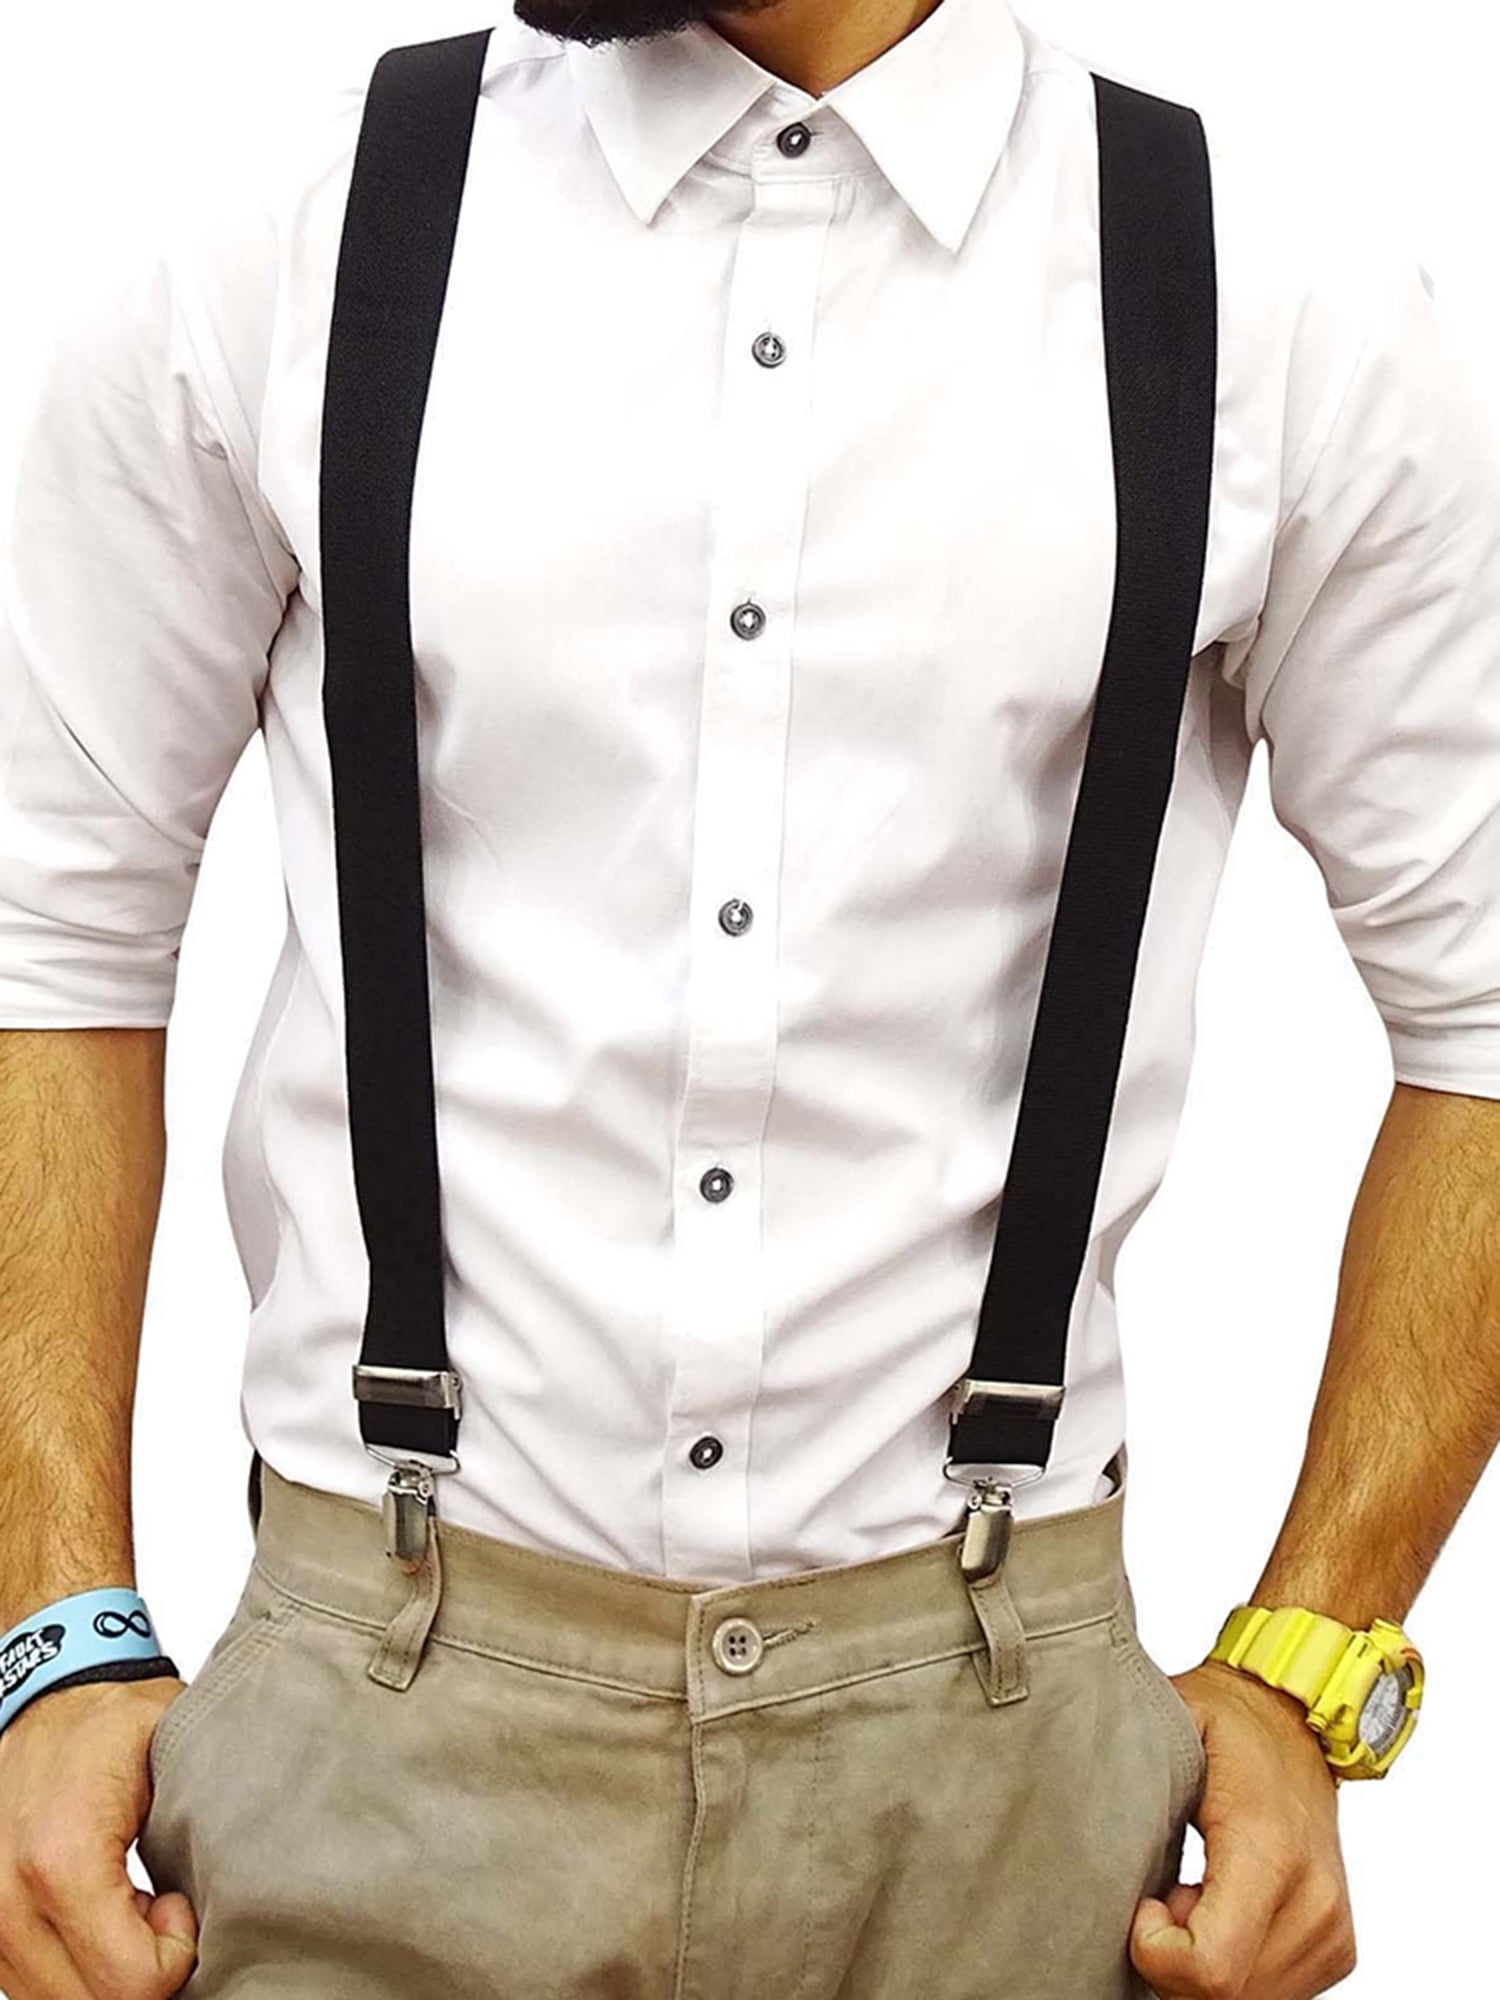 Unisex Teens Men Ladies Adjustable Slim Fashion Braces Suspenders Y Back Clip On 